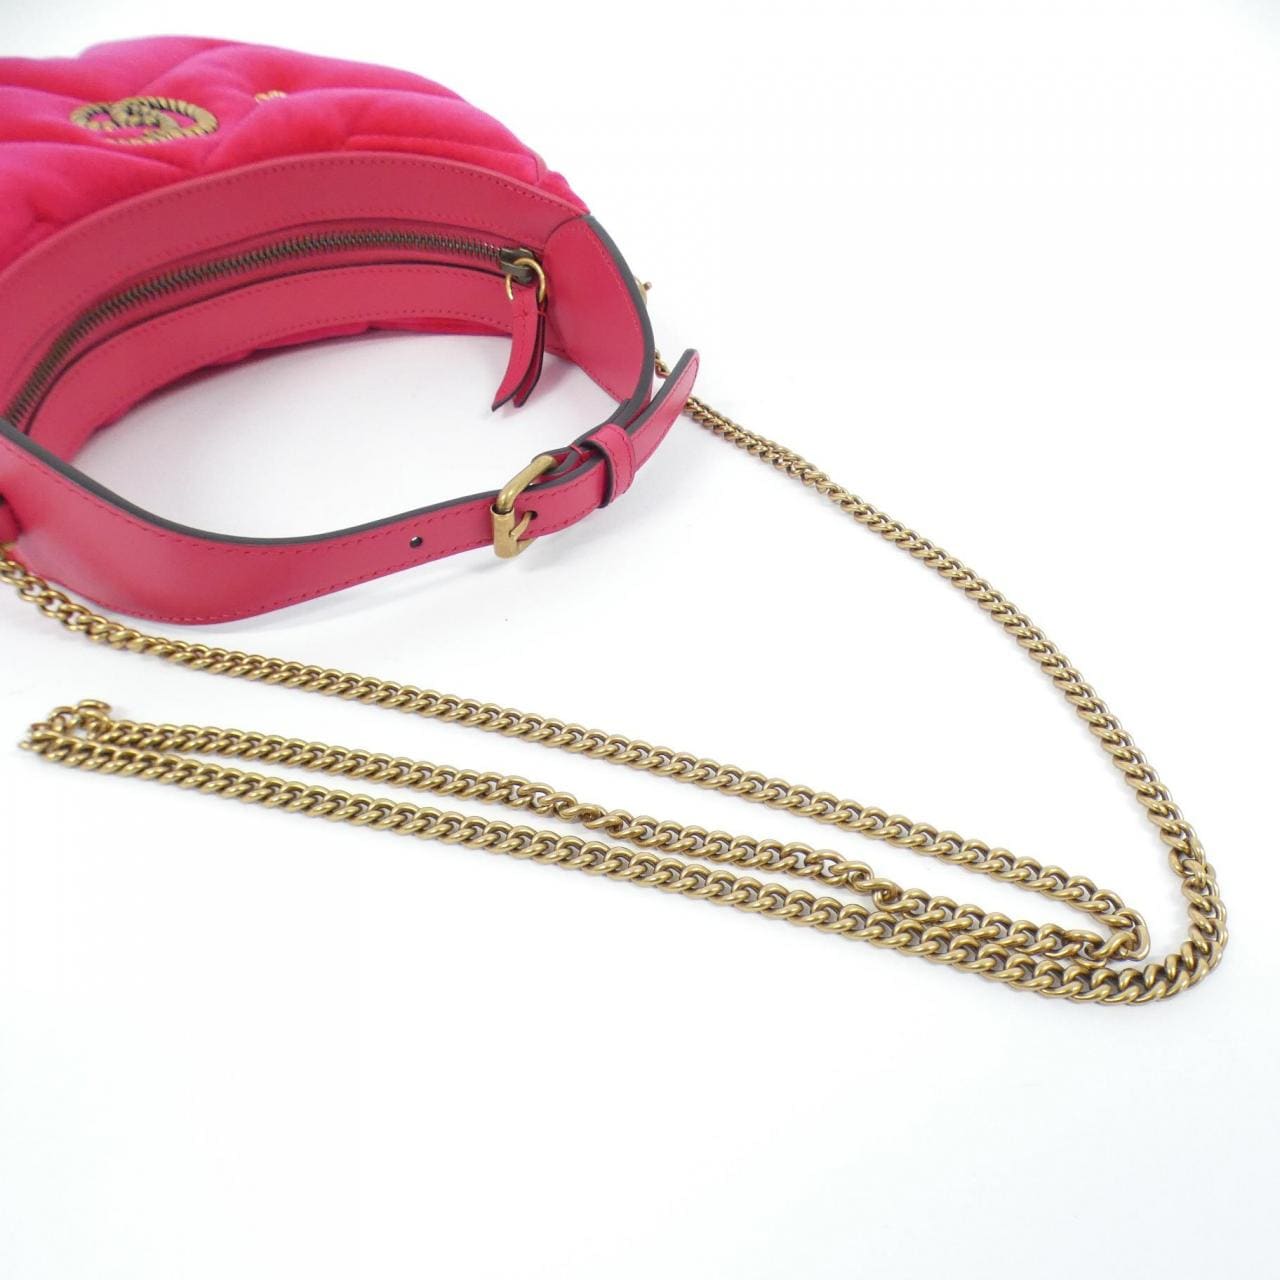 [Unused items] Gucci GG MARMONT 770983 FACK2 shoulder bag